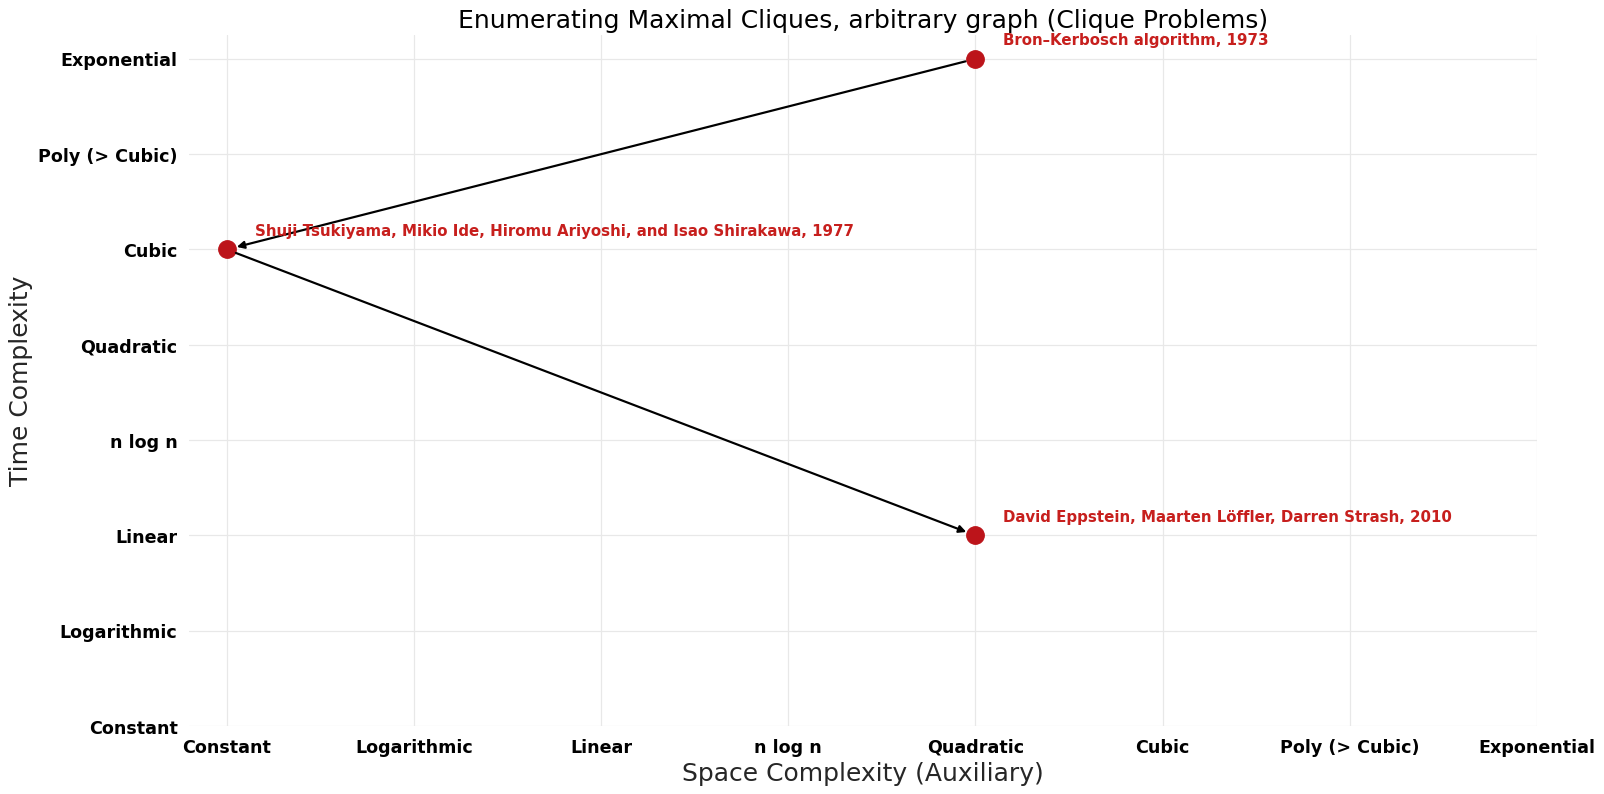 Clique Problems - Enumerating Maximal Cliques, arbitrary graph - Pareto Frontier.png